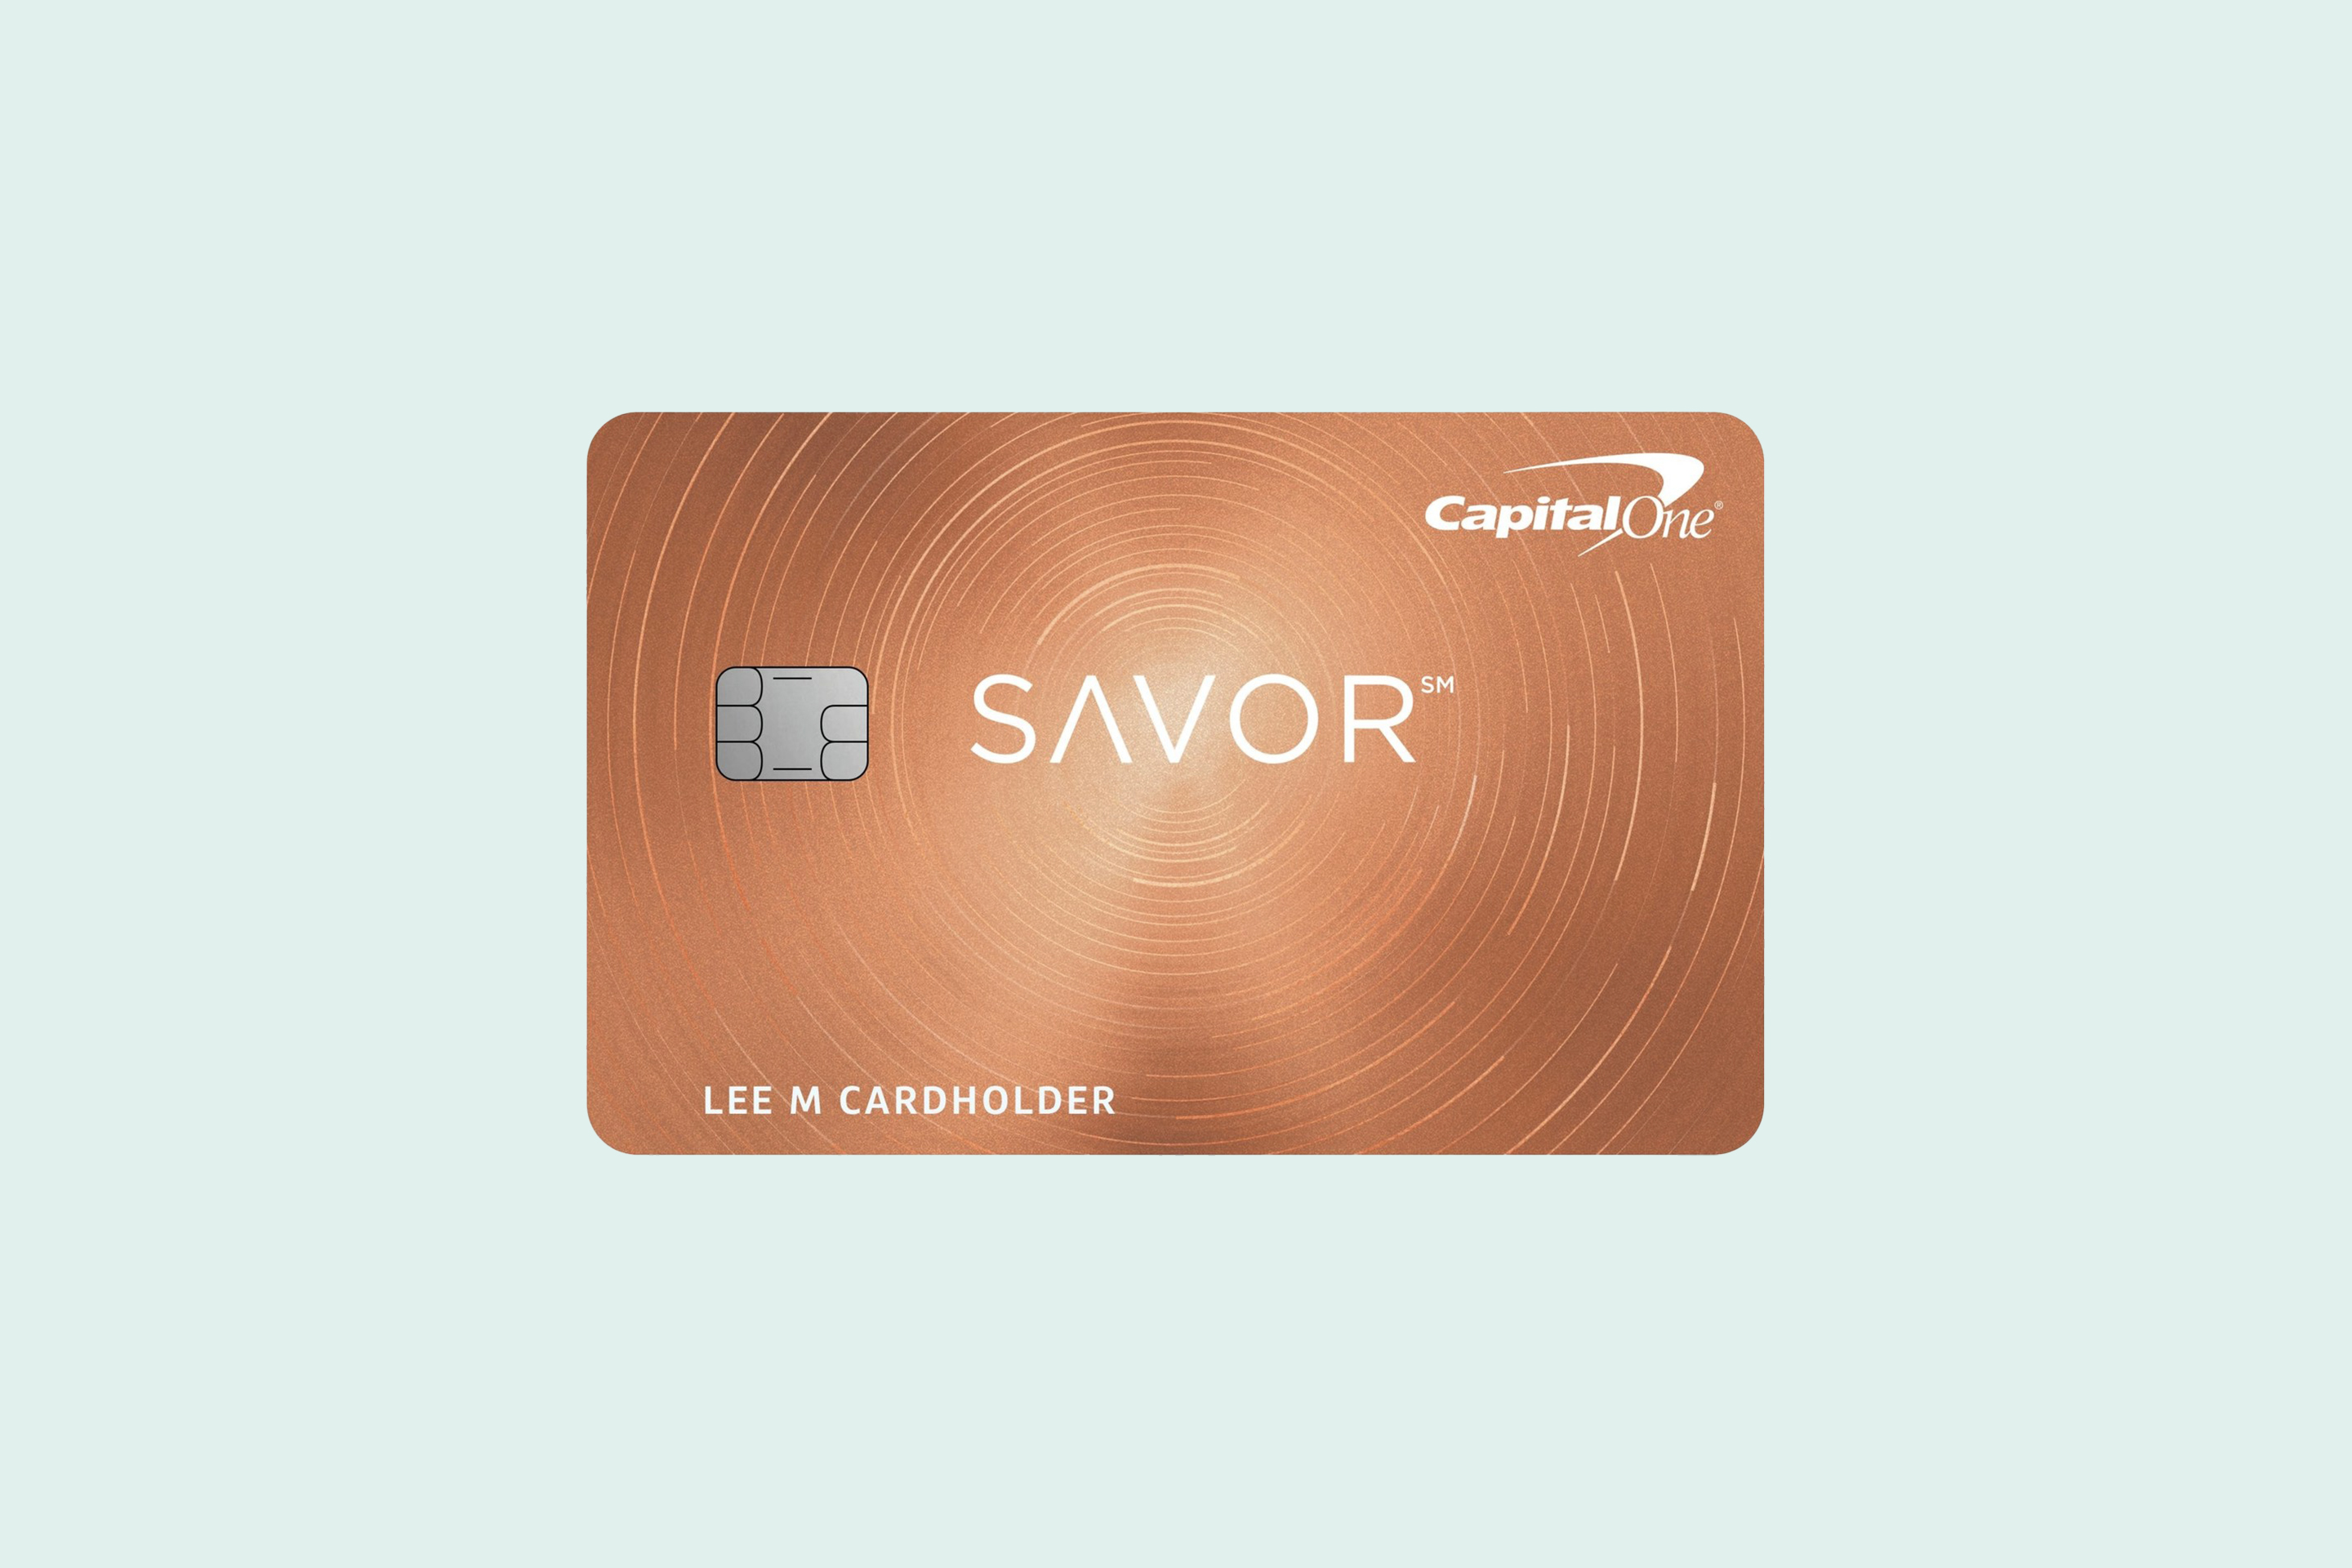 Capital One Savor Credit Card